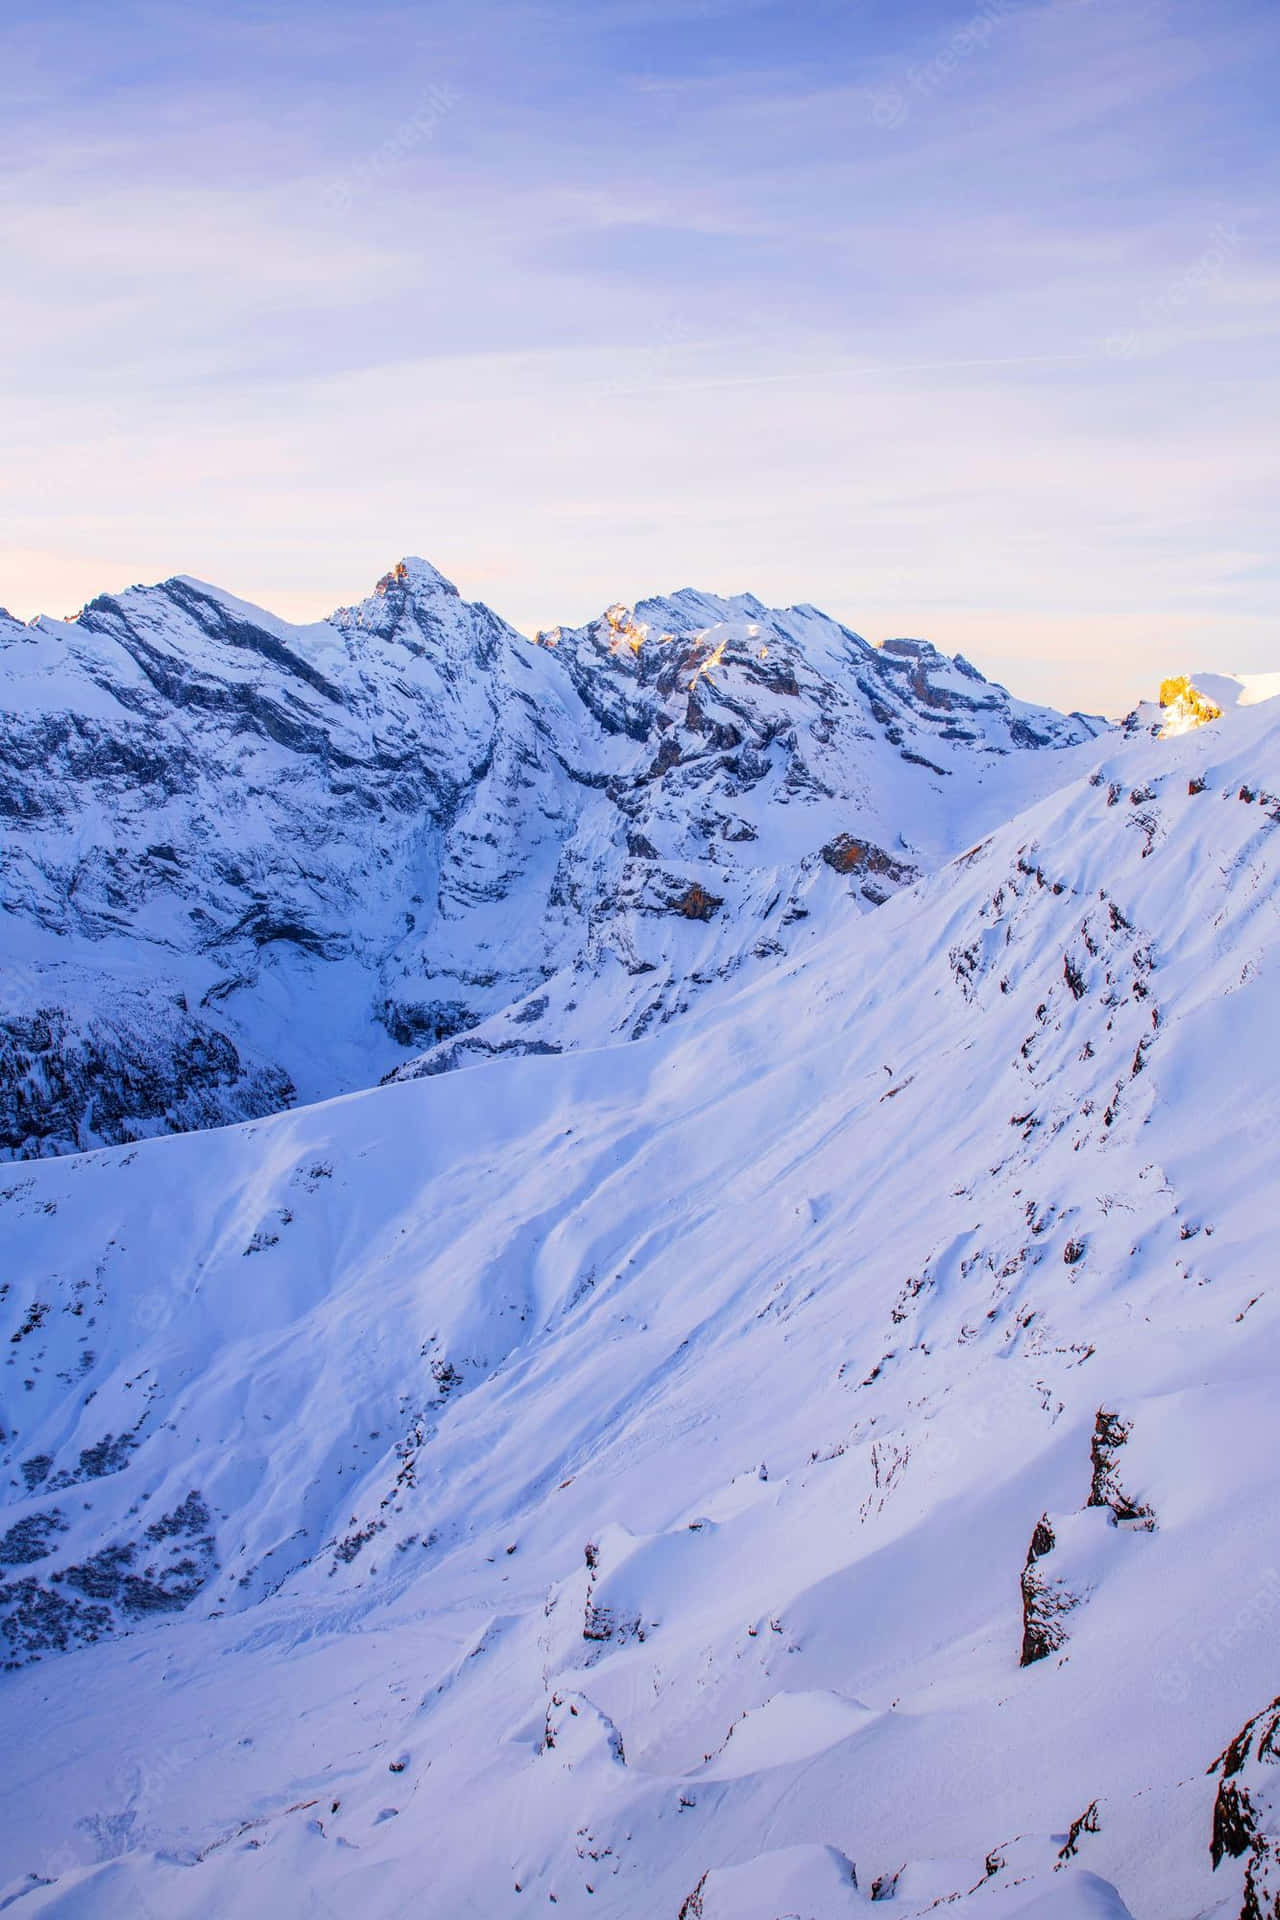 Take the Plunge and Explore the Treasured Tracks of This Ski Mountain Wallpaper